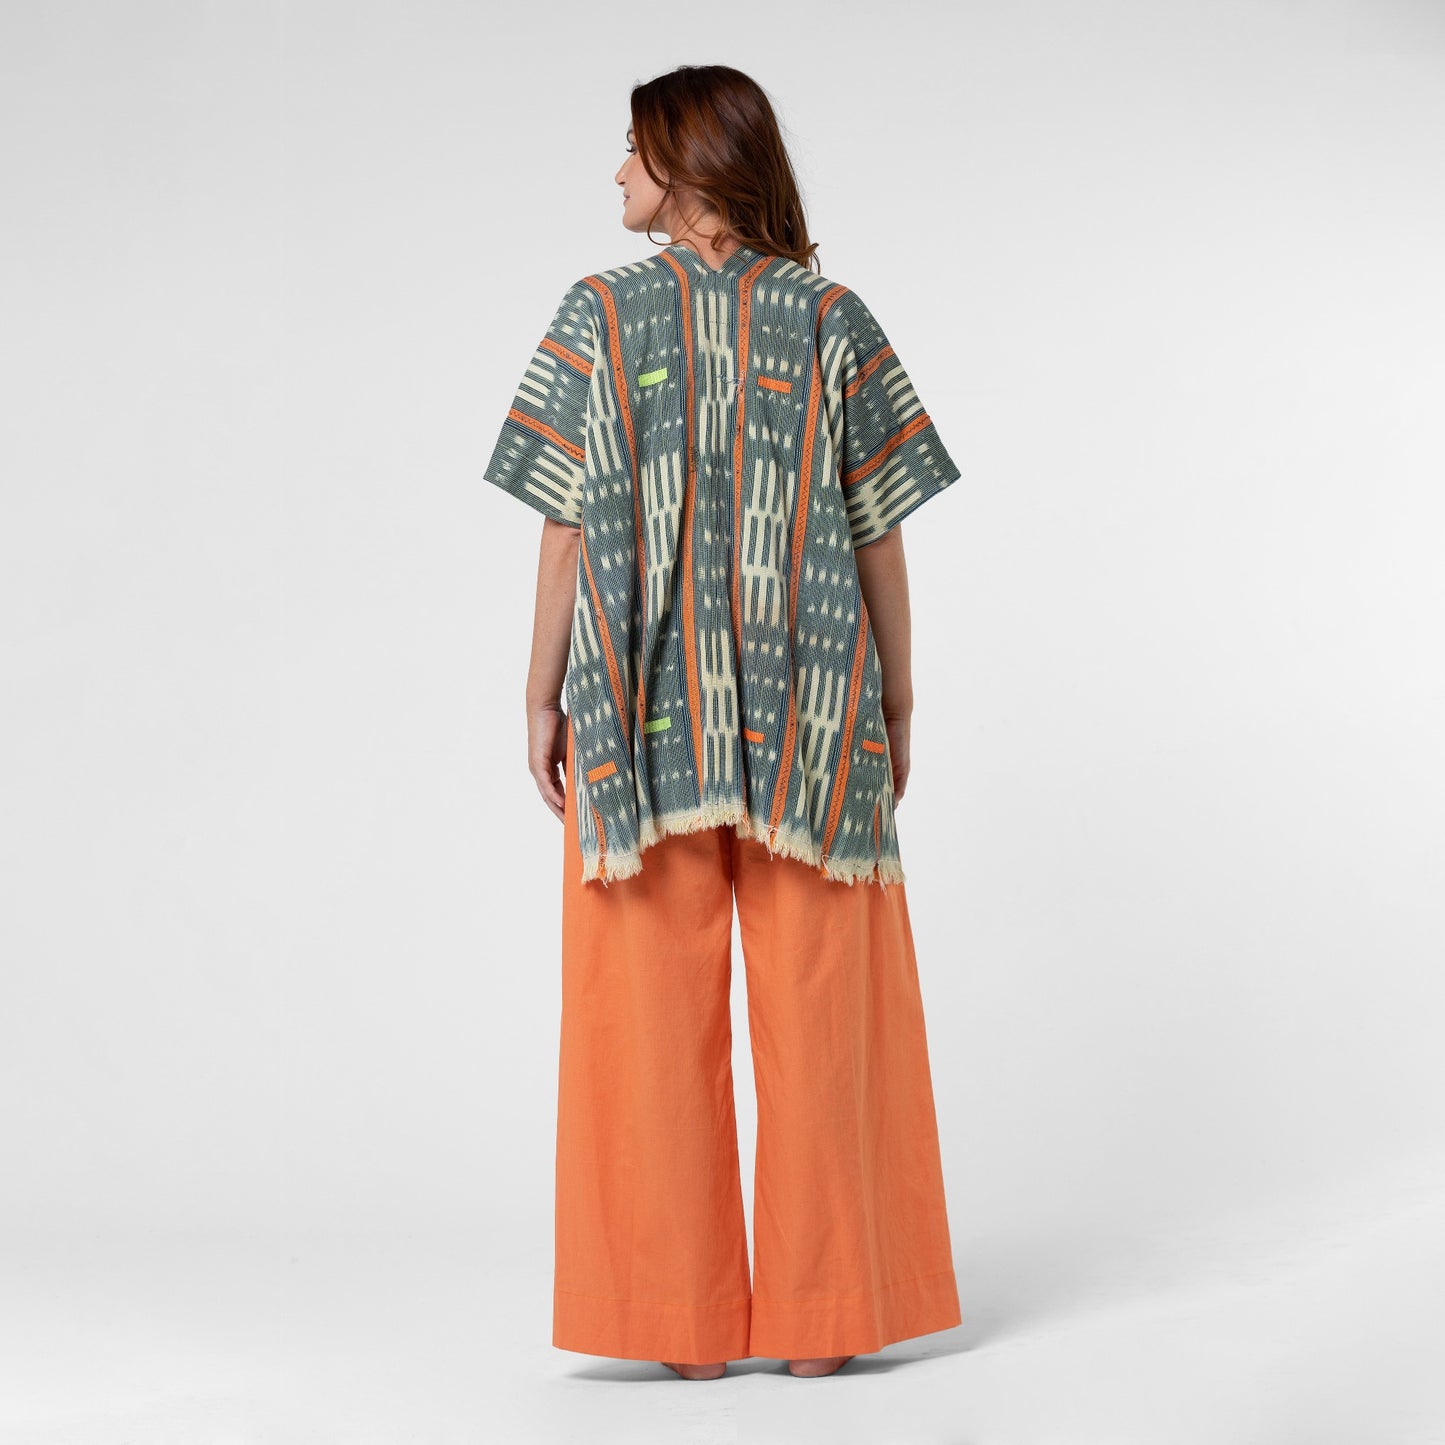 Moroccan vintage kimono style poncho